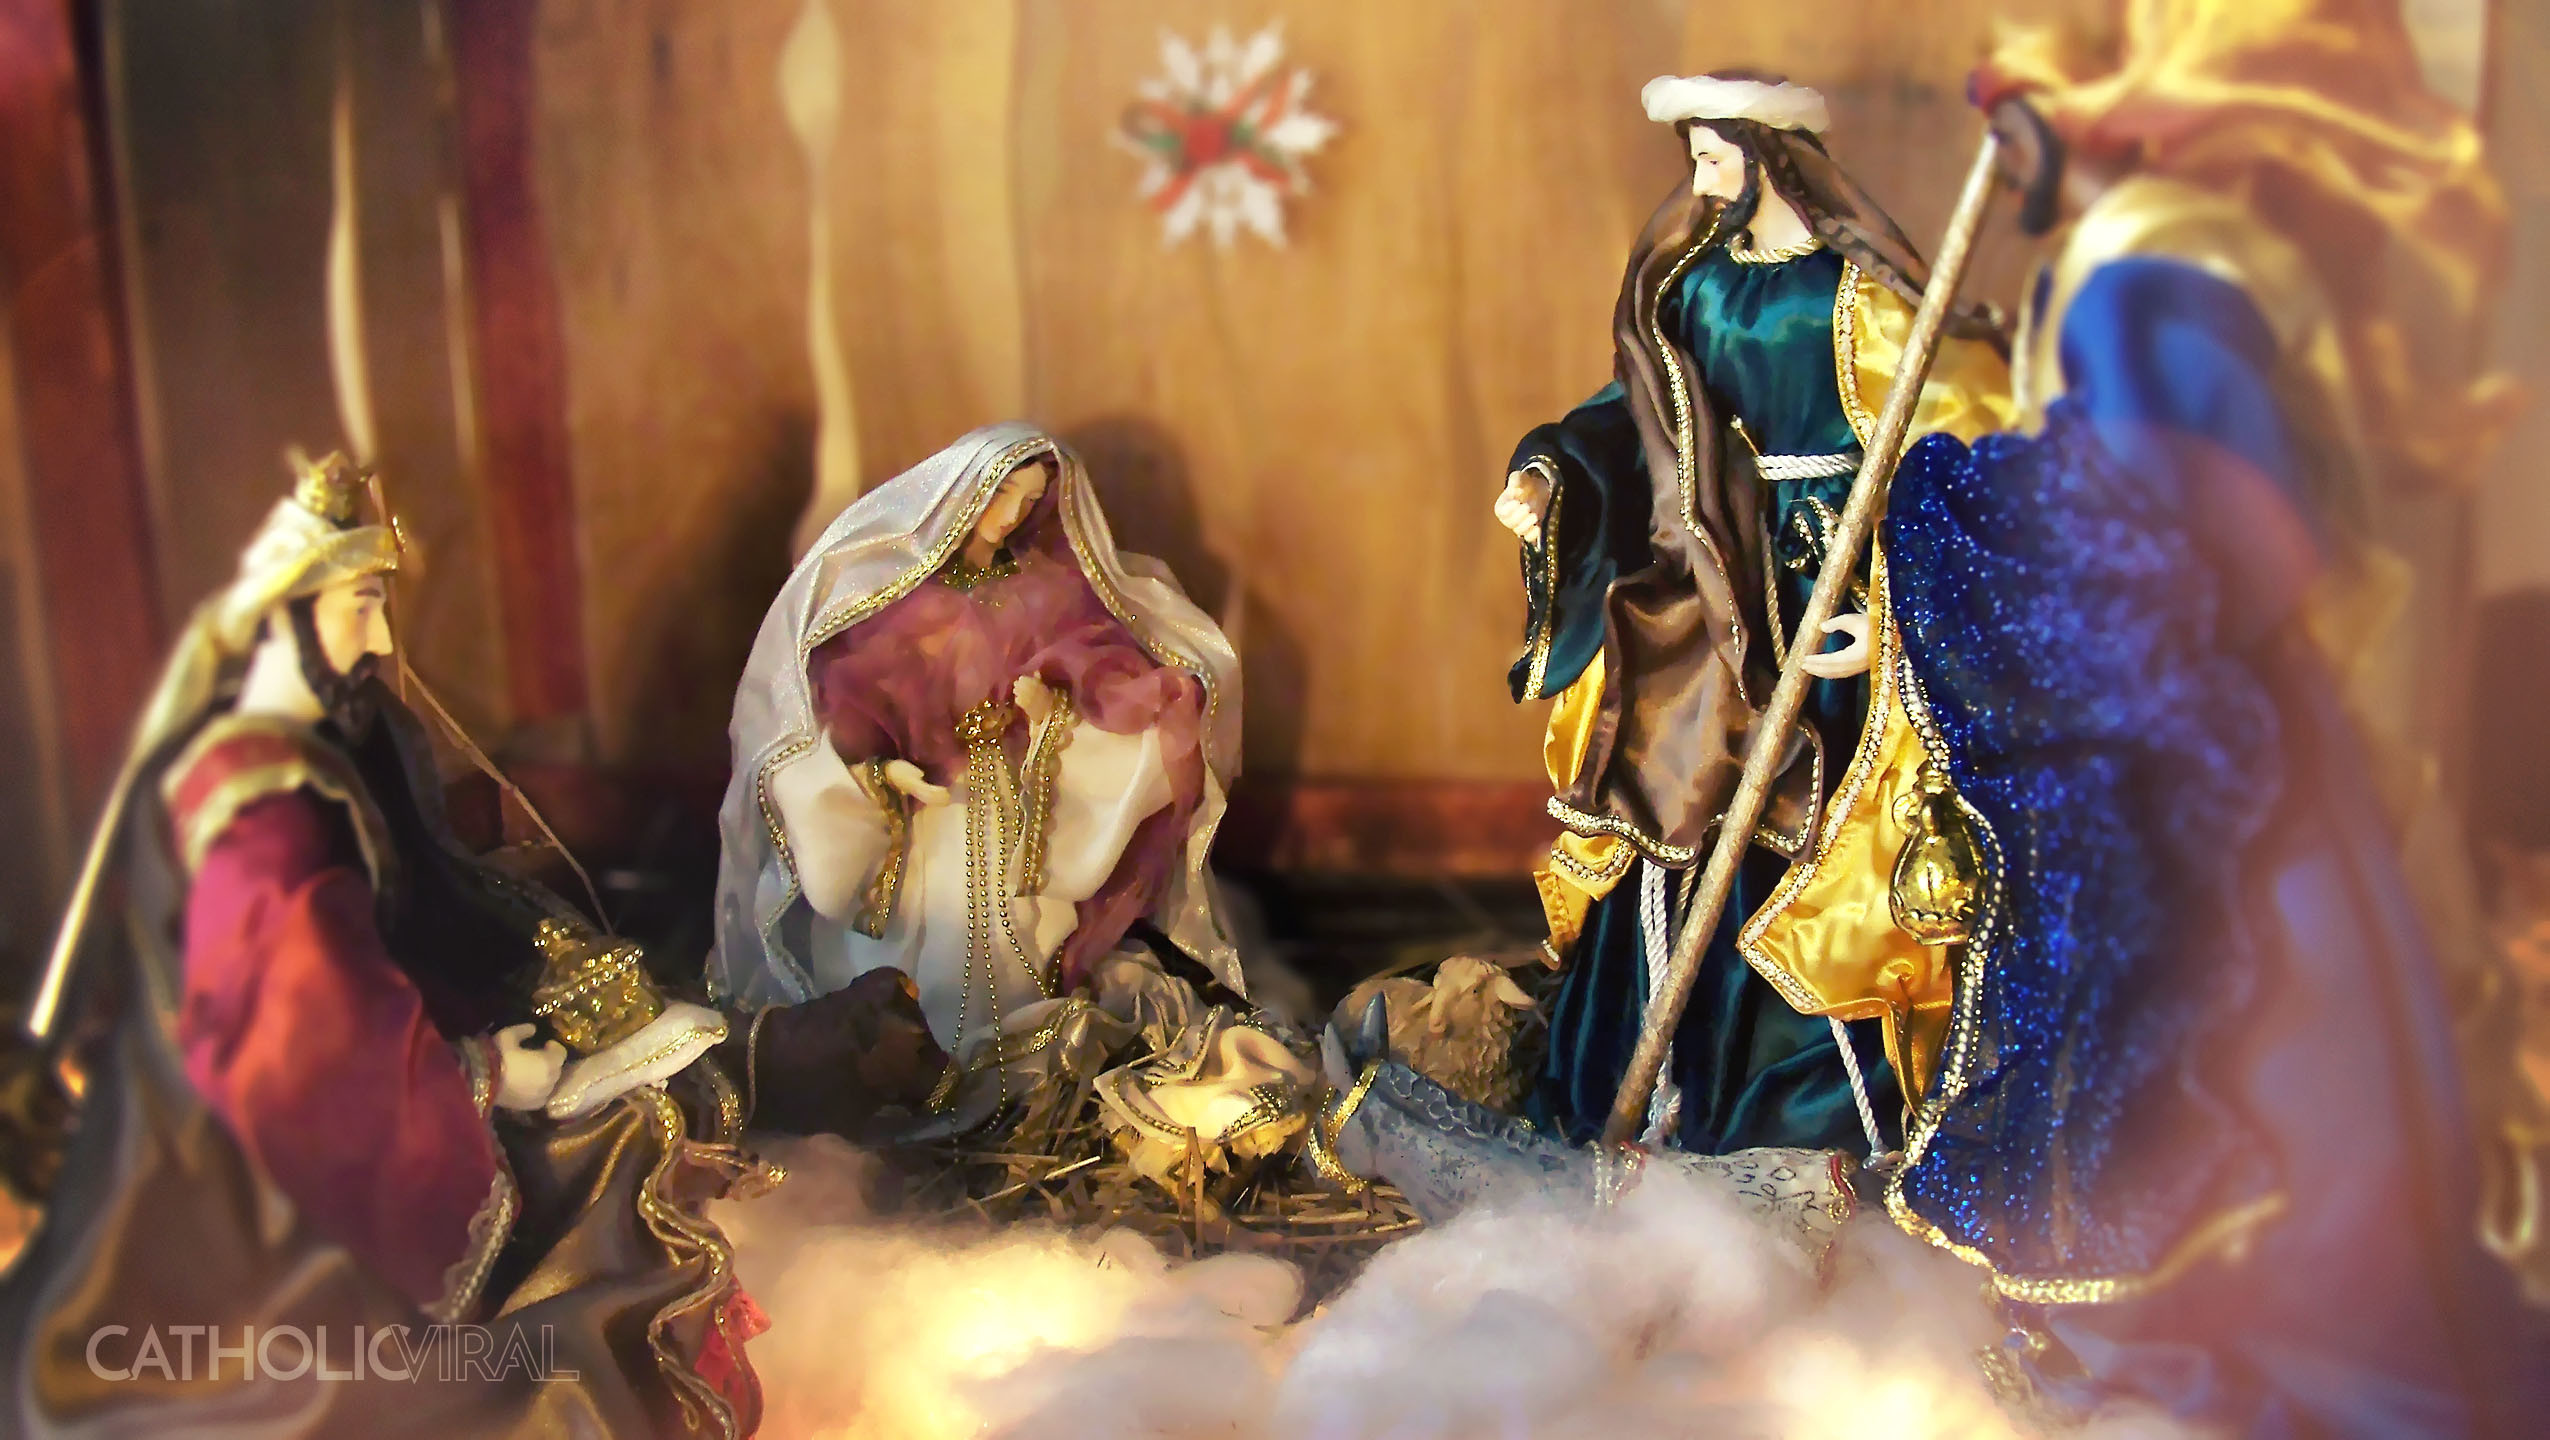 2550x1440 ... Christmas Wallpapers - Nativity Creche Scene. Share!